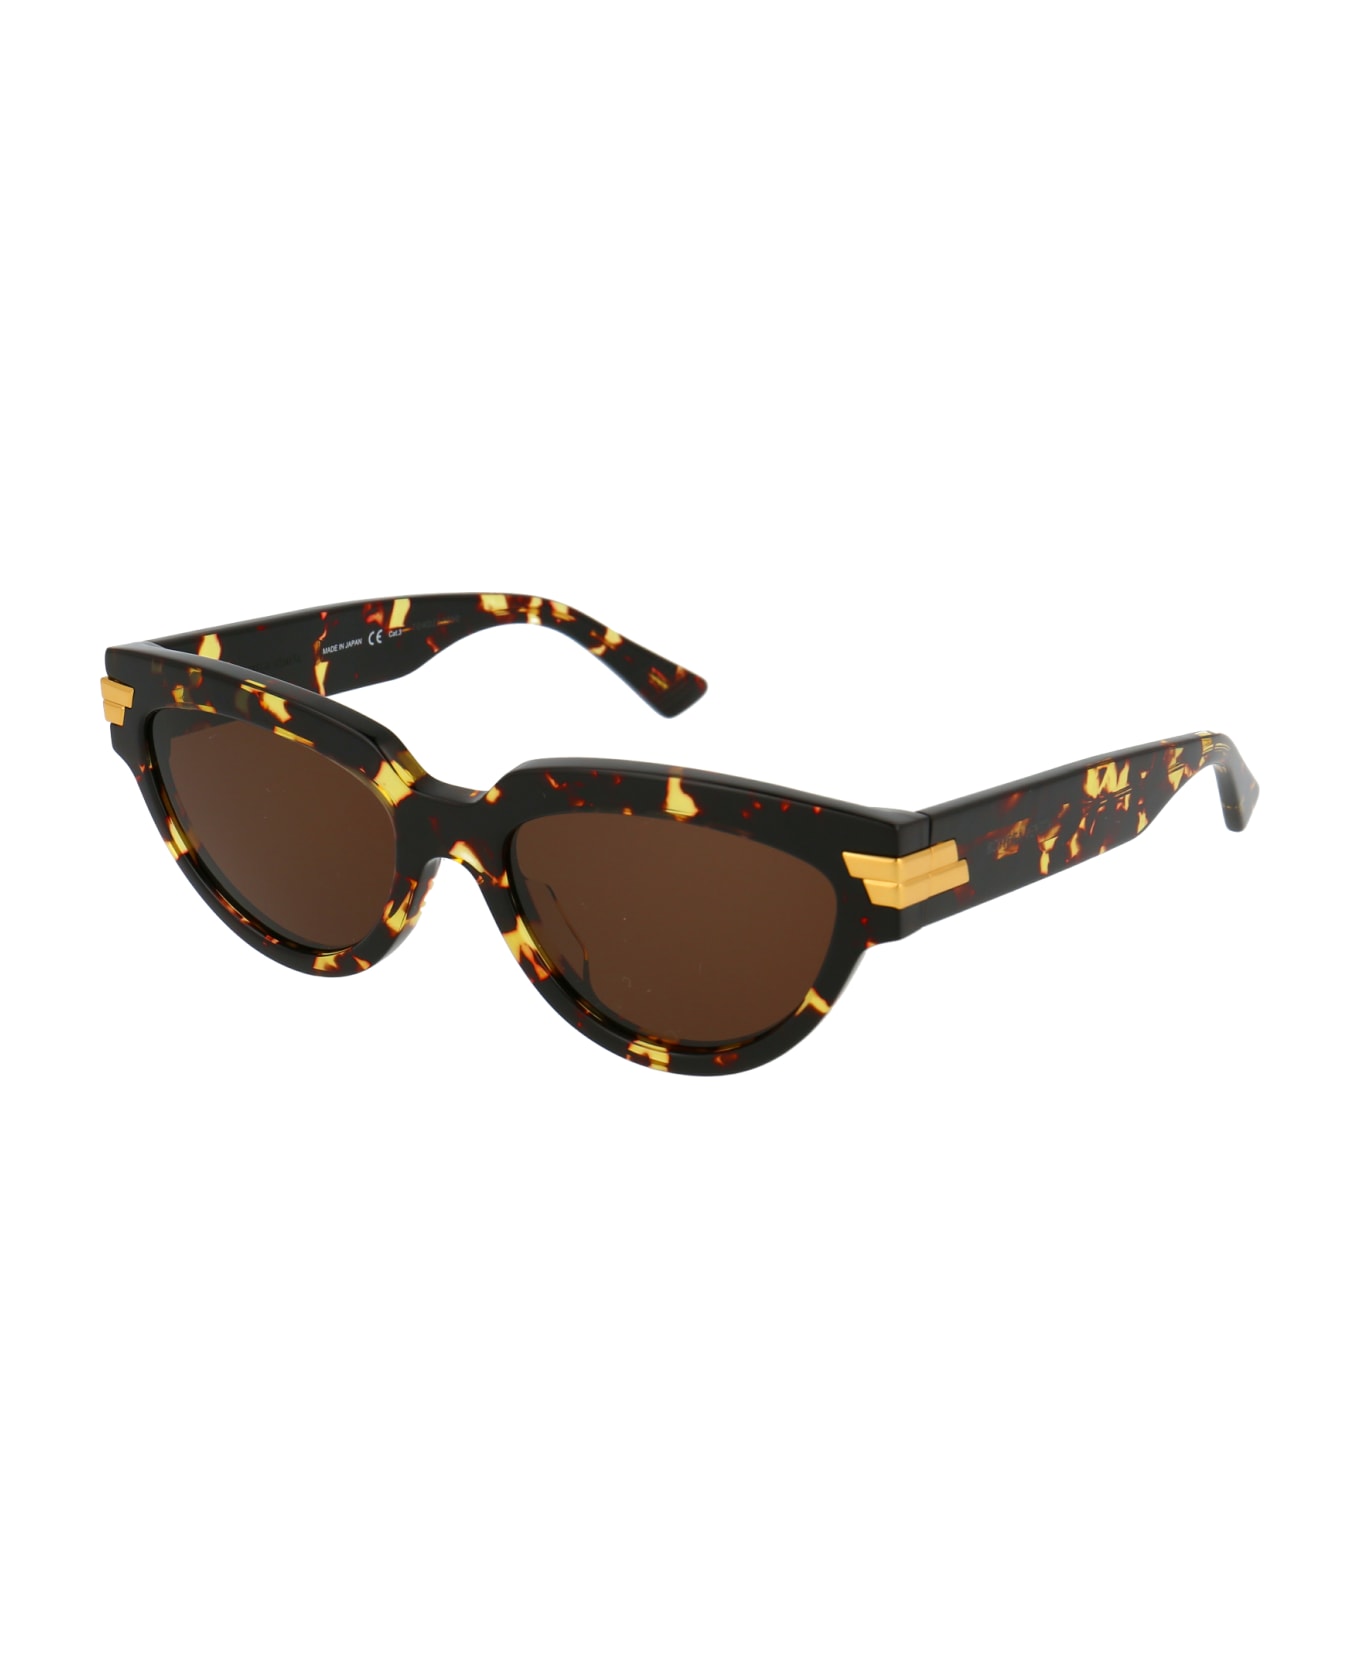 Bottega Veneta Eyewear Bv1035s Sunglasses - 002 HAVANA HAVANA BROWN